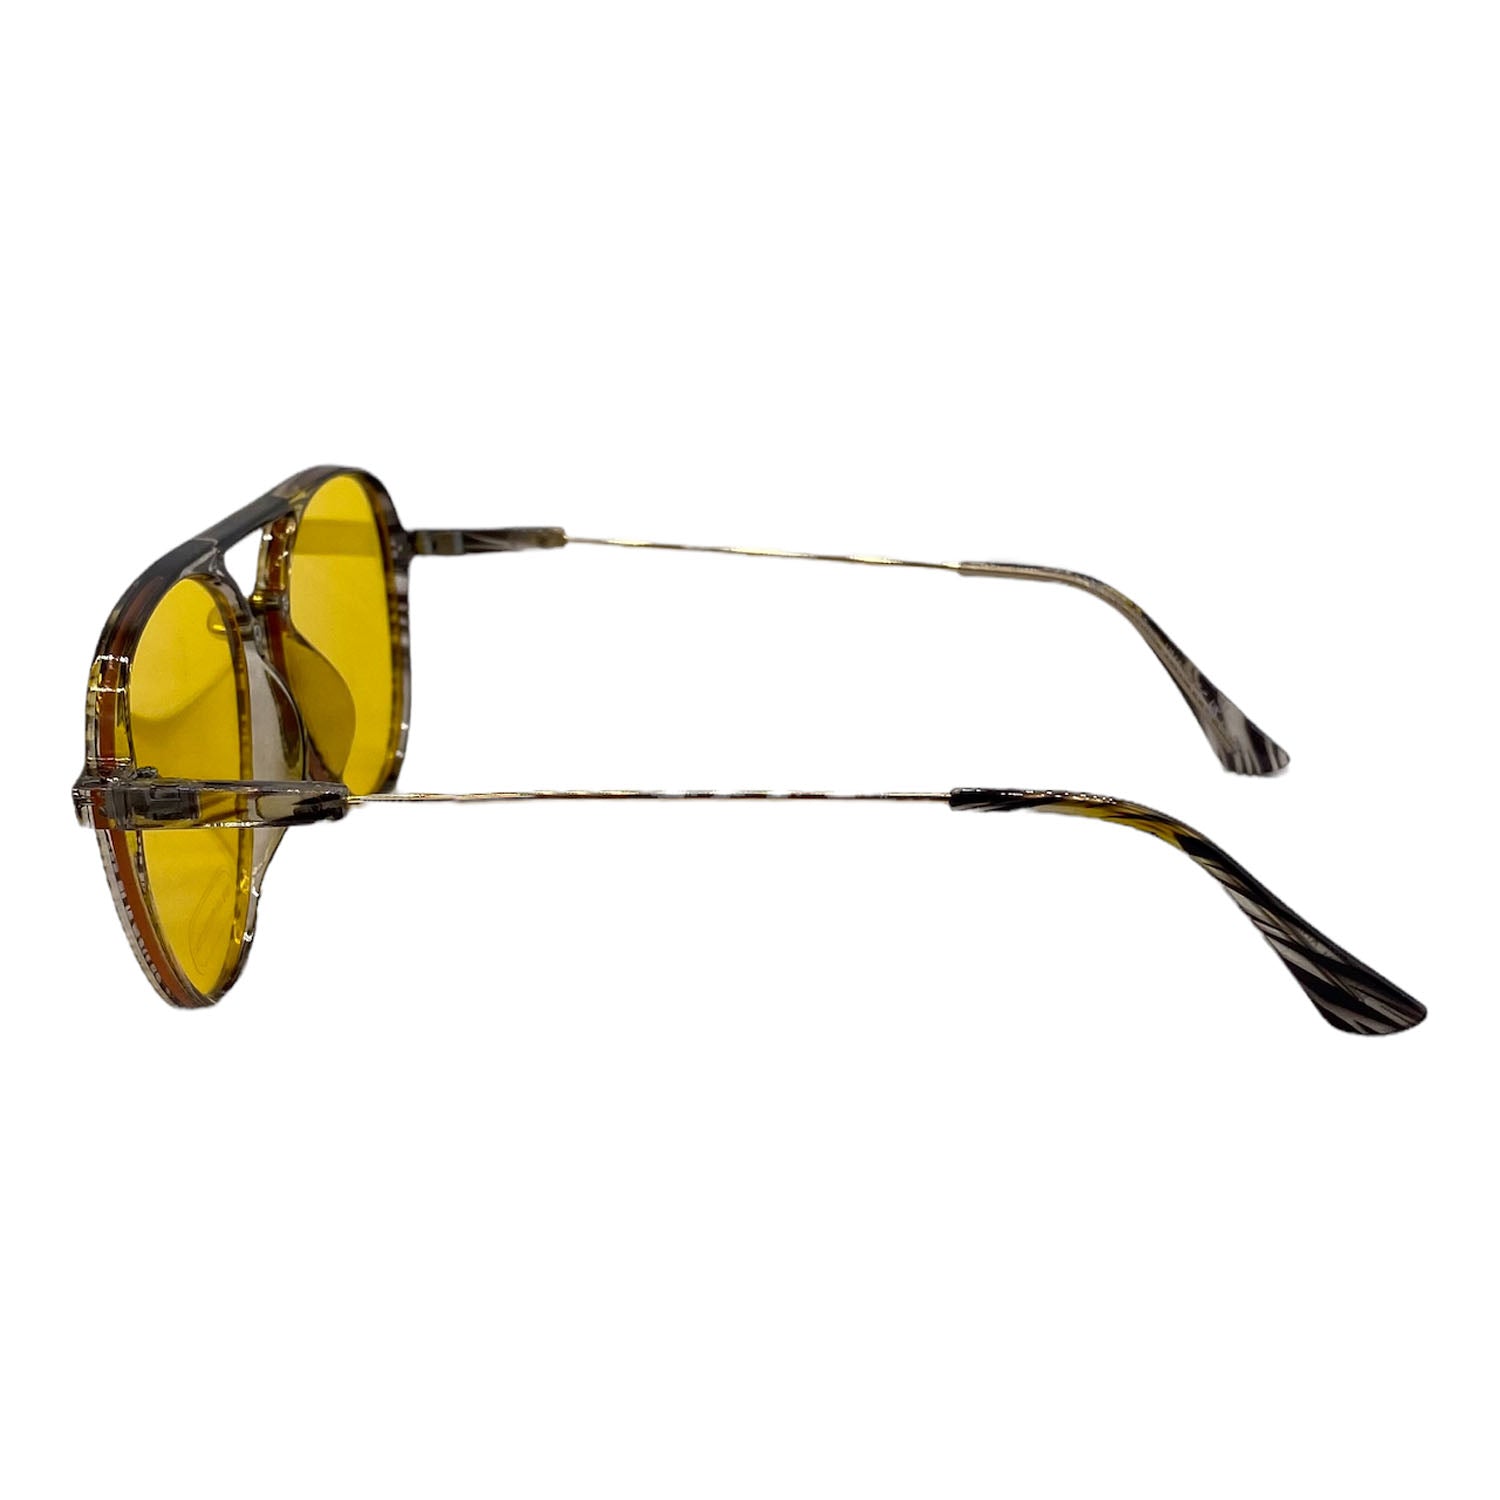 Empire Cove Oversized Aviator Sunglasses Stylish Round Shades Sunnies UV Protection